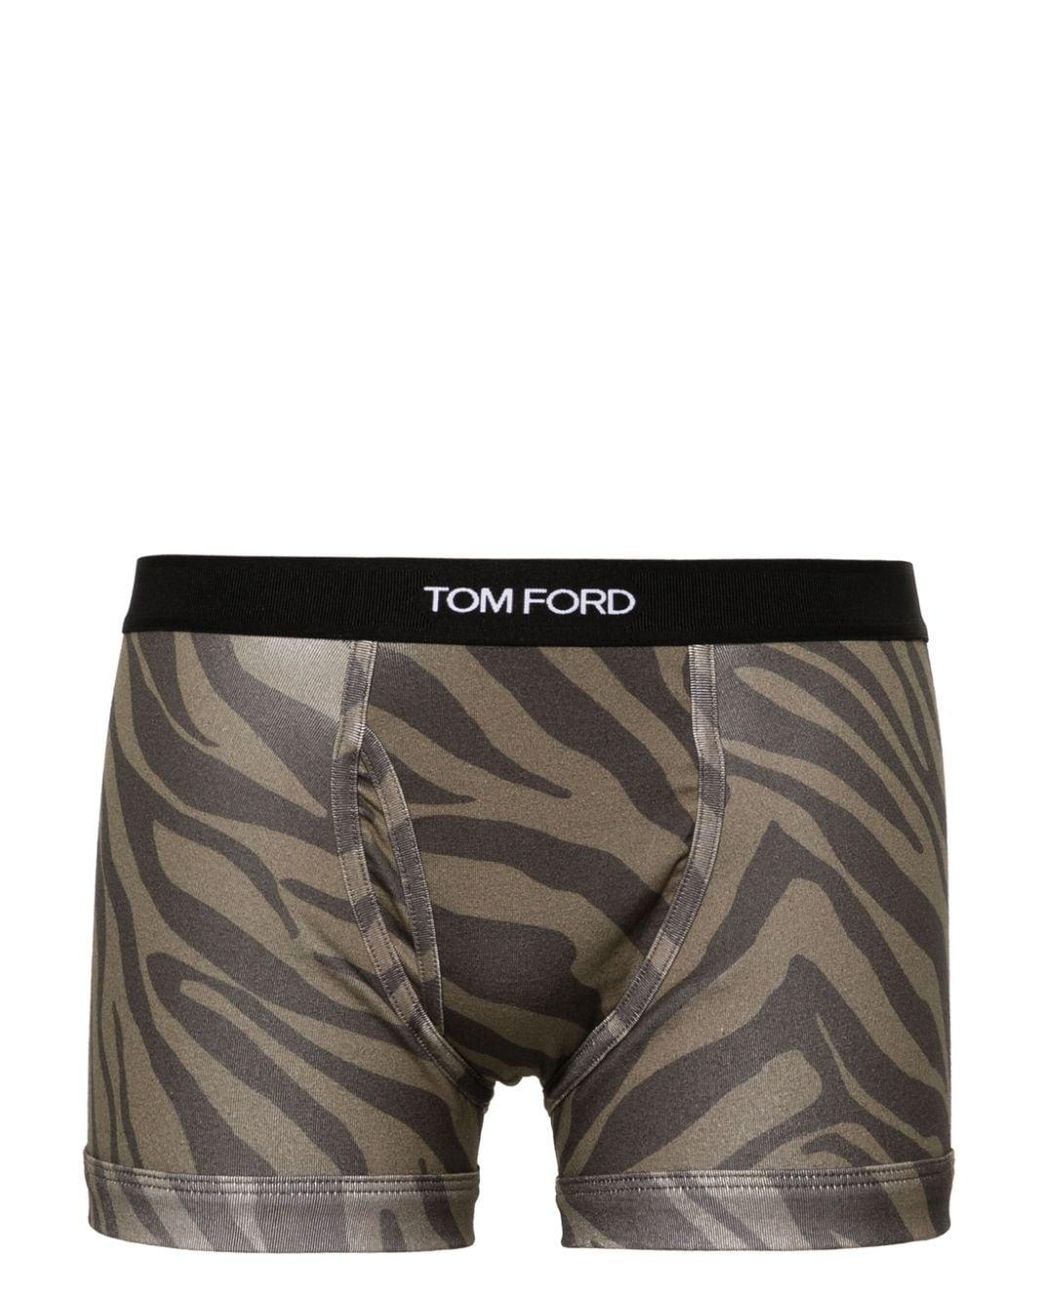 Tom Ford Zebra-print Cotton Briefs in Black for Men